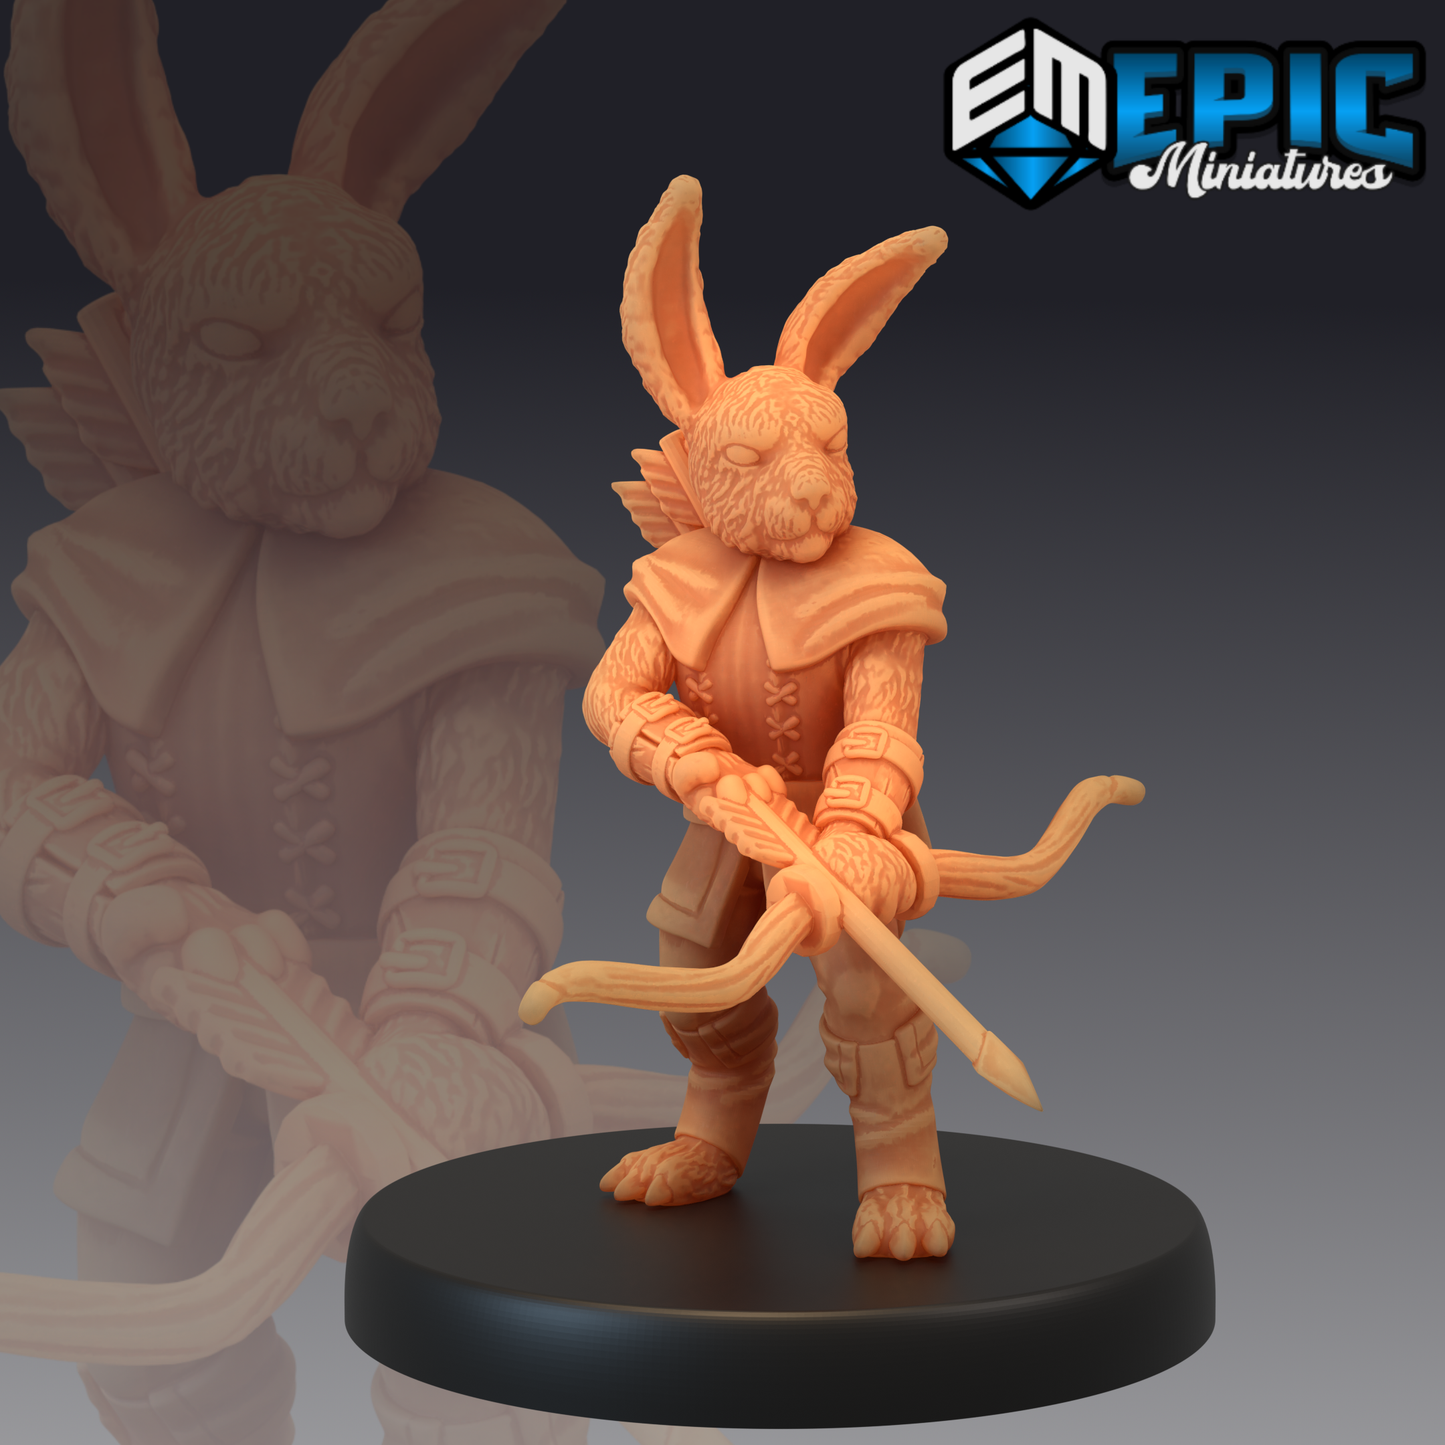 bunny platoon set 1 by Epic miniature